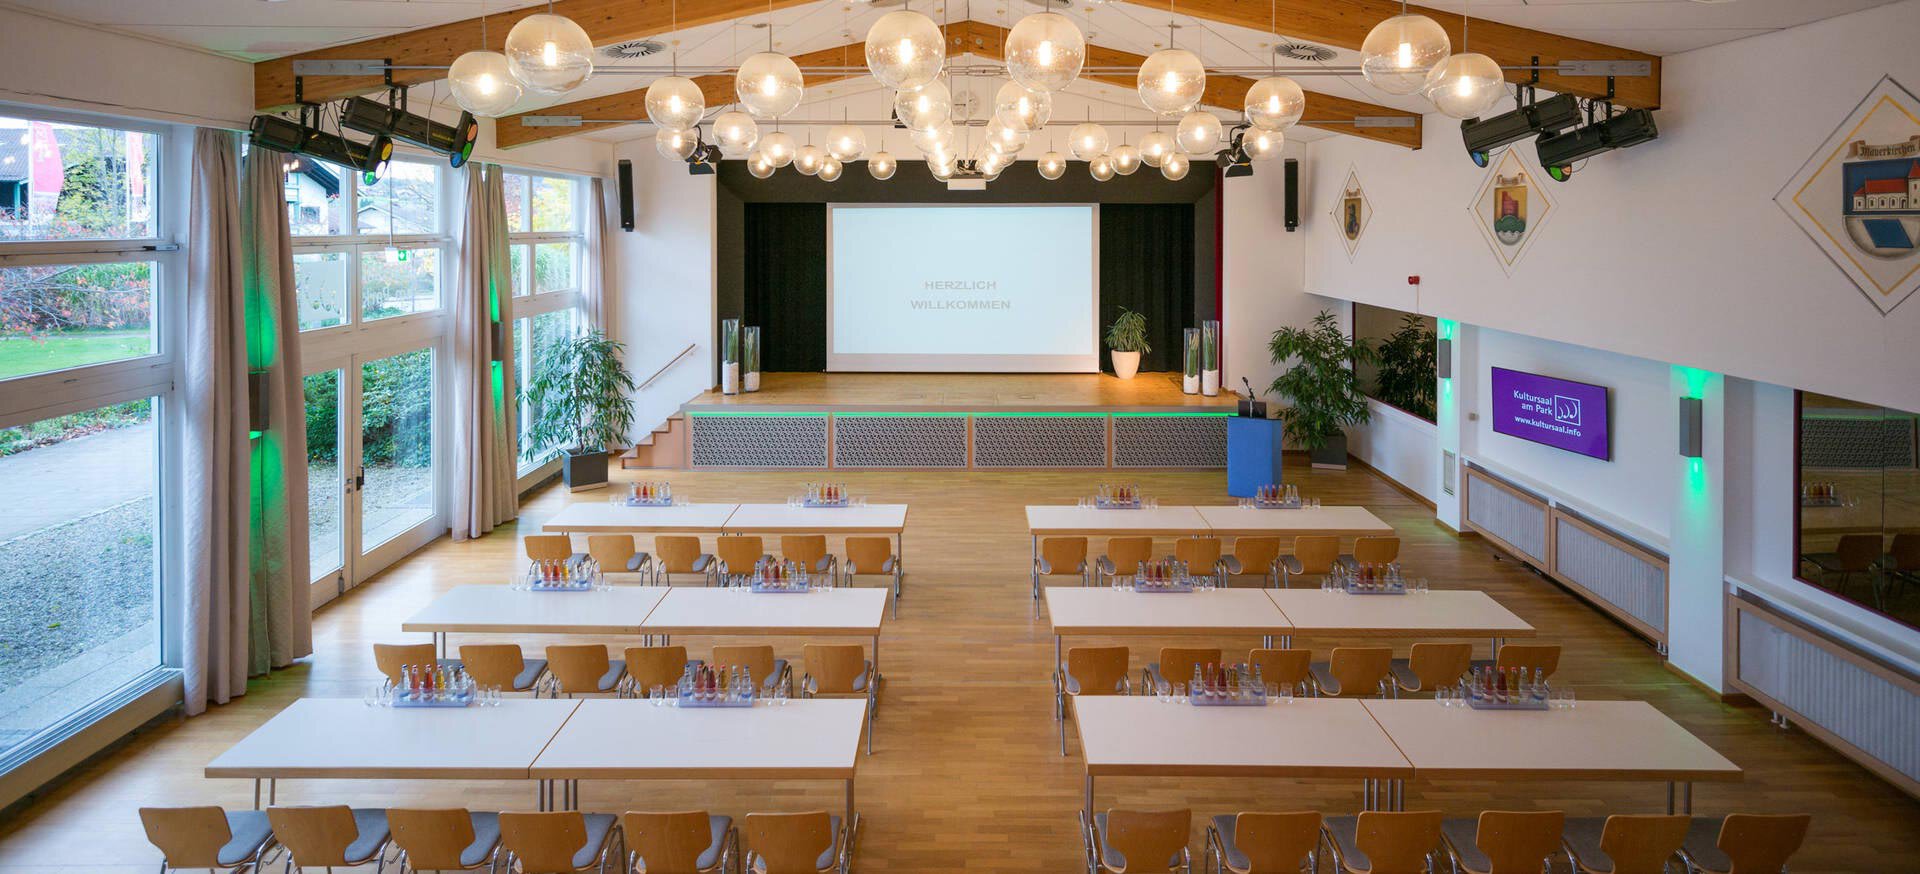 Chiemgau Thermen, Kultursaal am Park | © Chiemgau Thermen